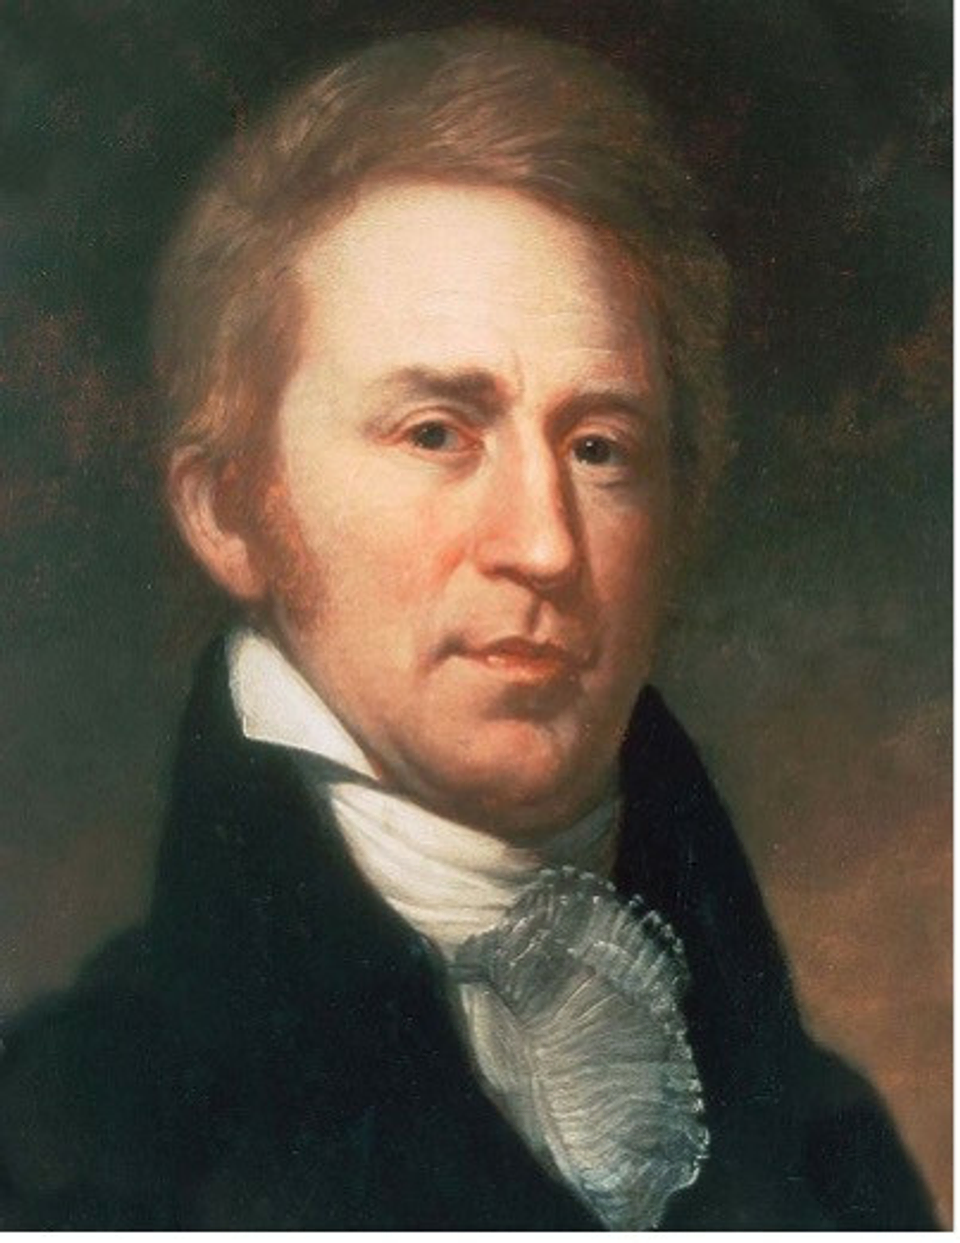 A painted portrait of William Clark